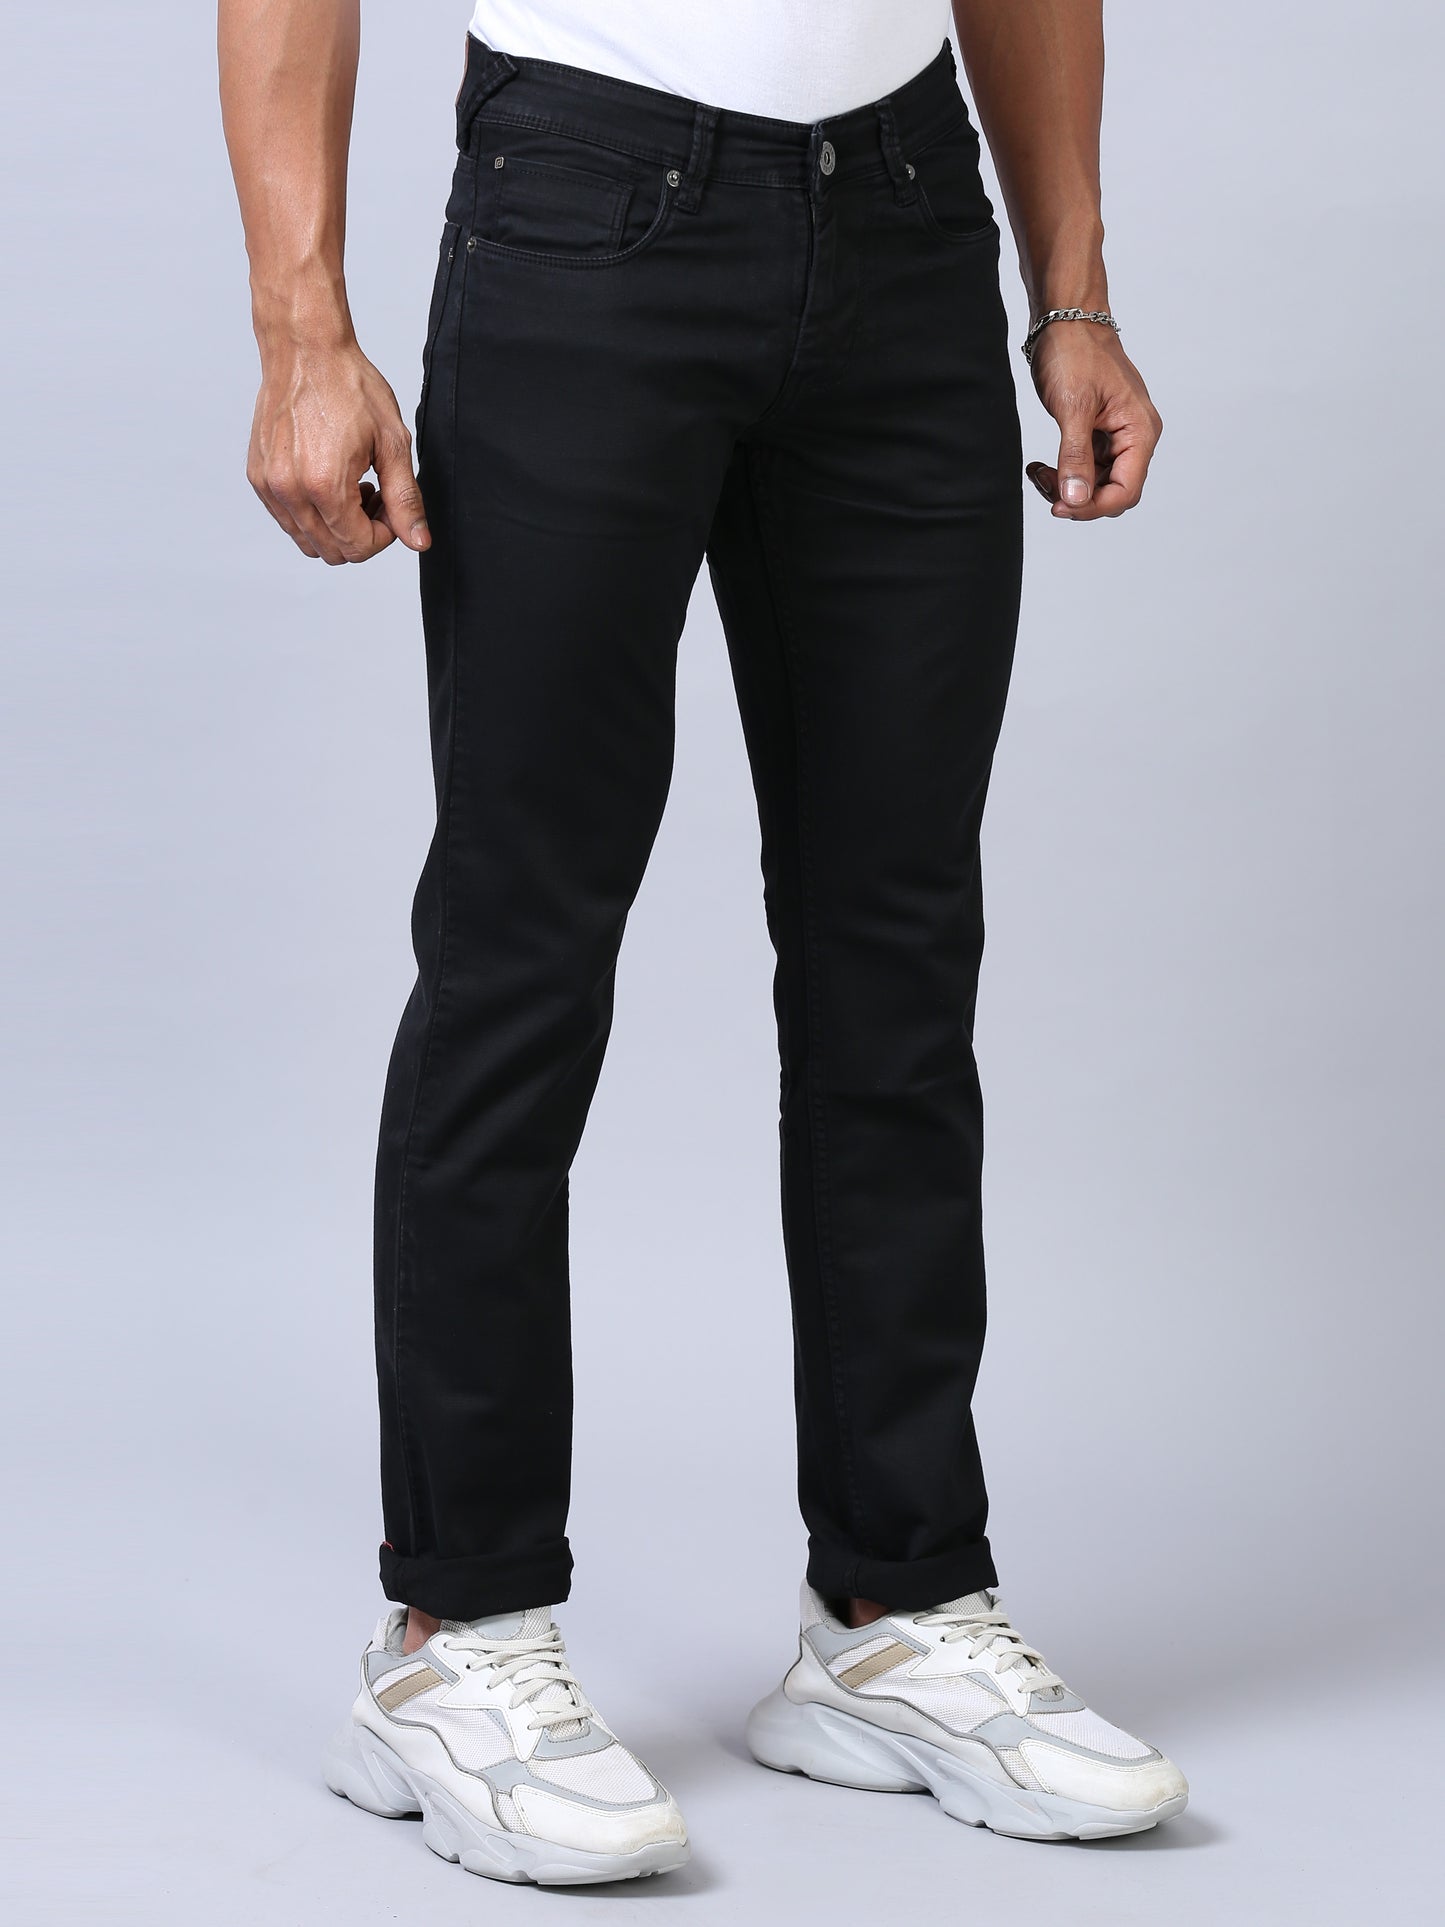 Onyx Black Distressed Denim Jeans for Men